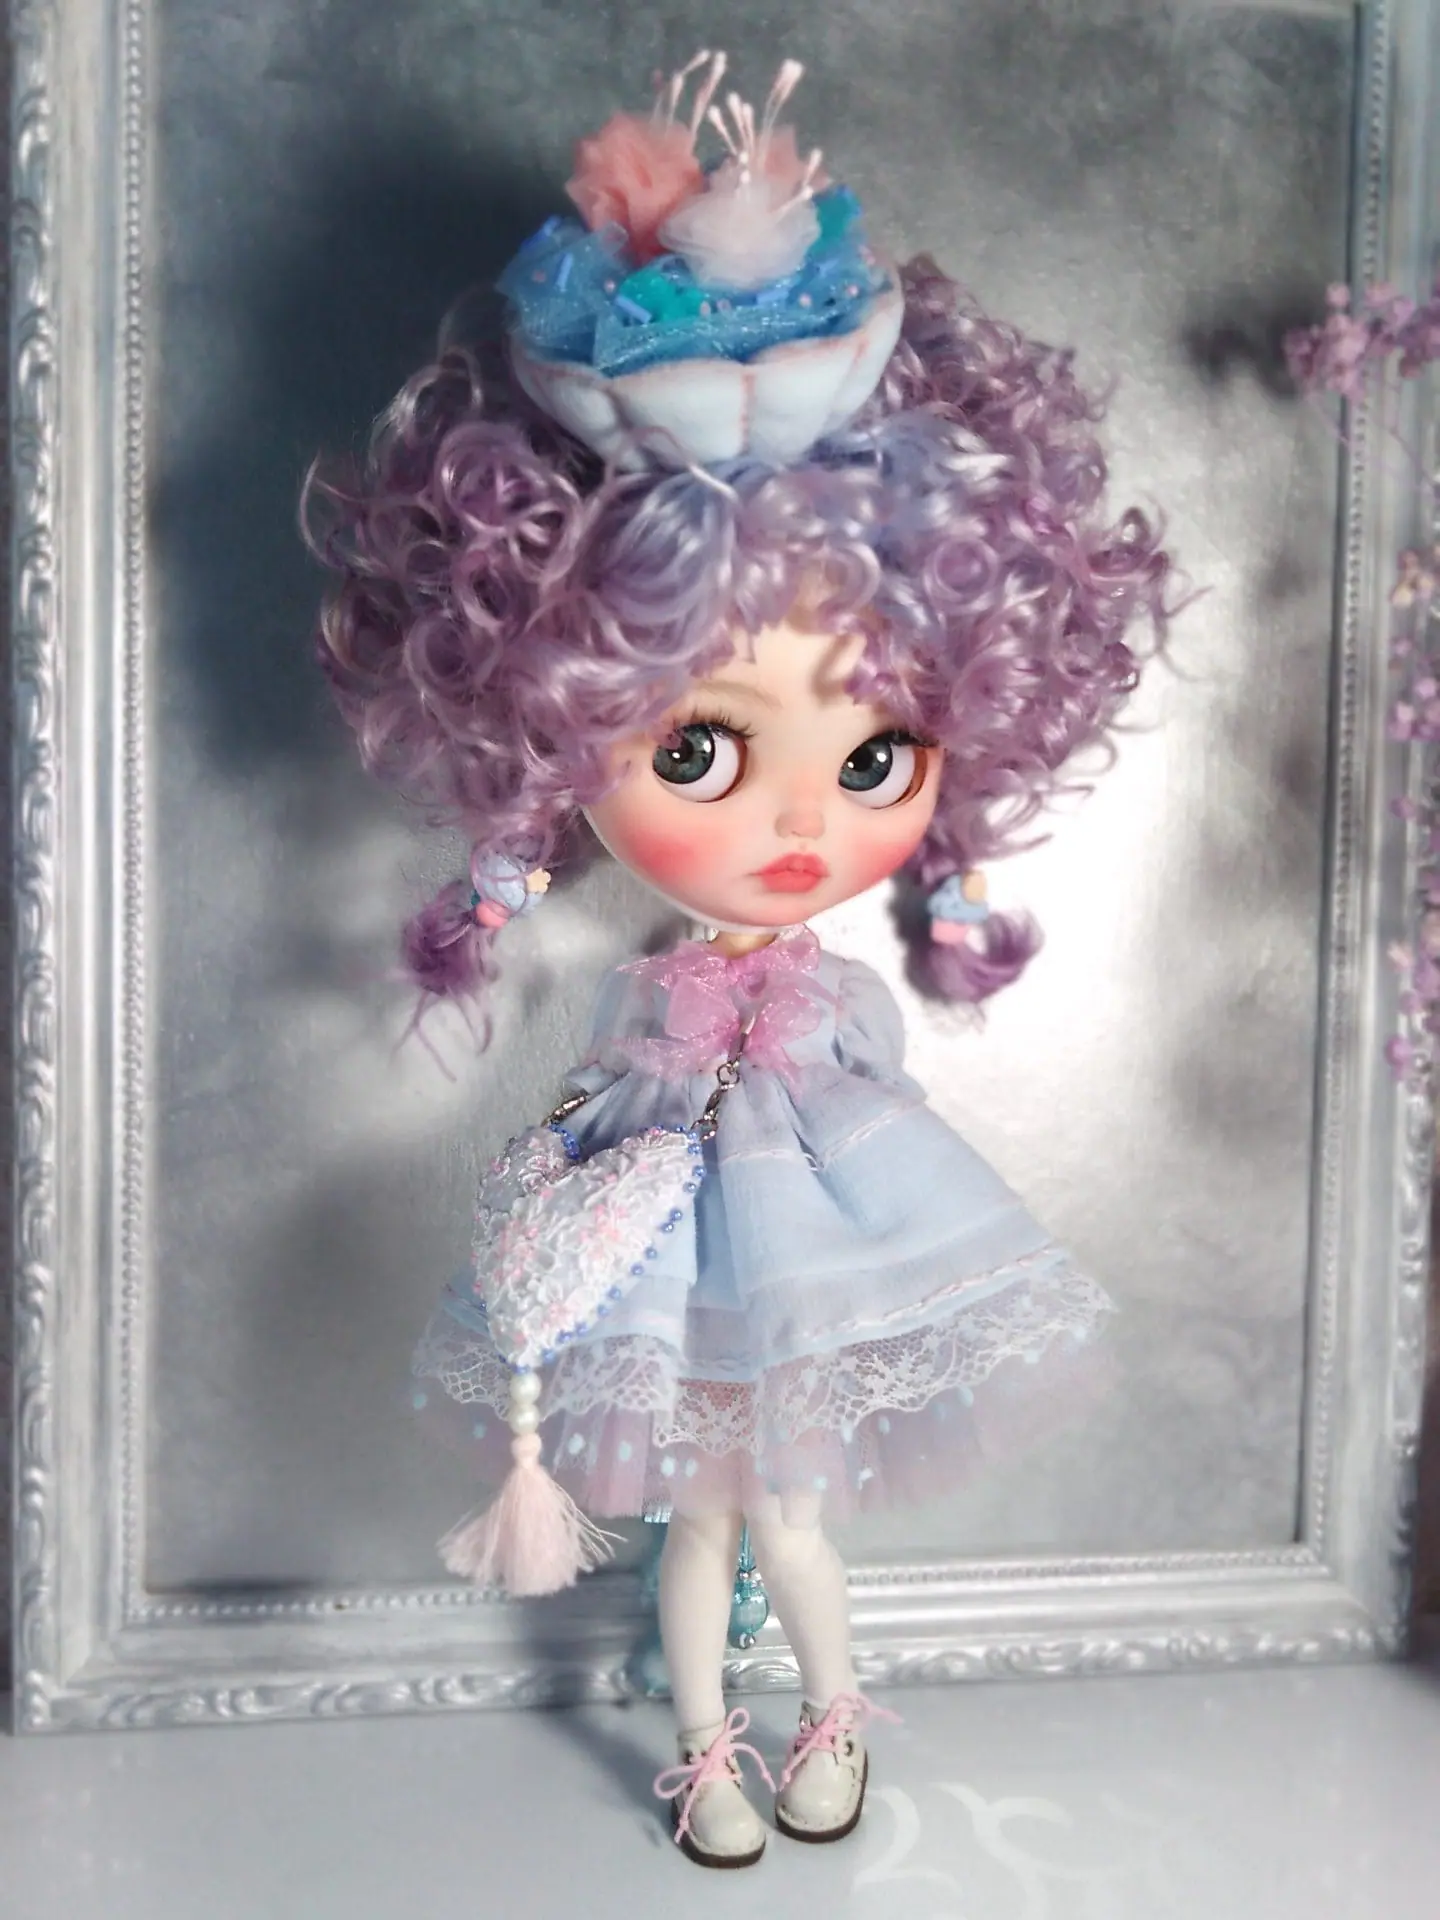 Blythe doll ౨ৎ  Blythe dolls, Pretty dolls, Ooak dolls